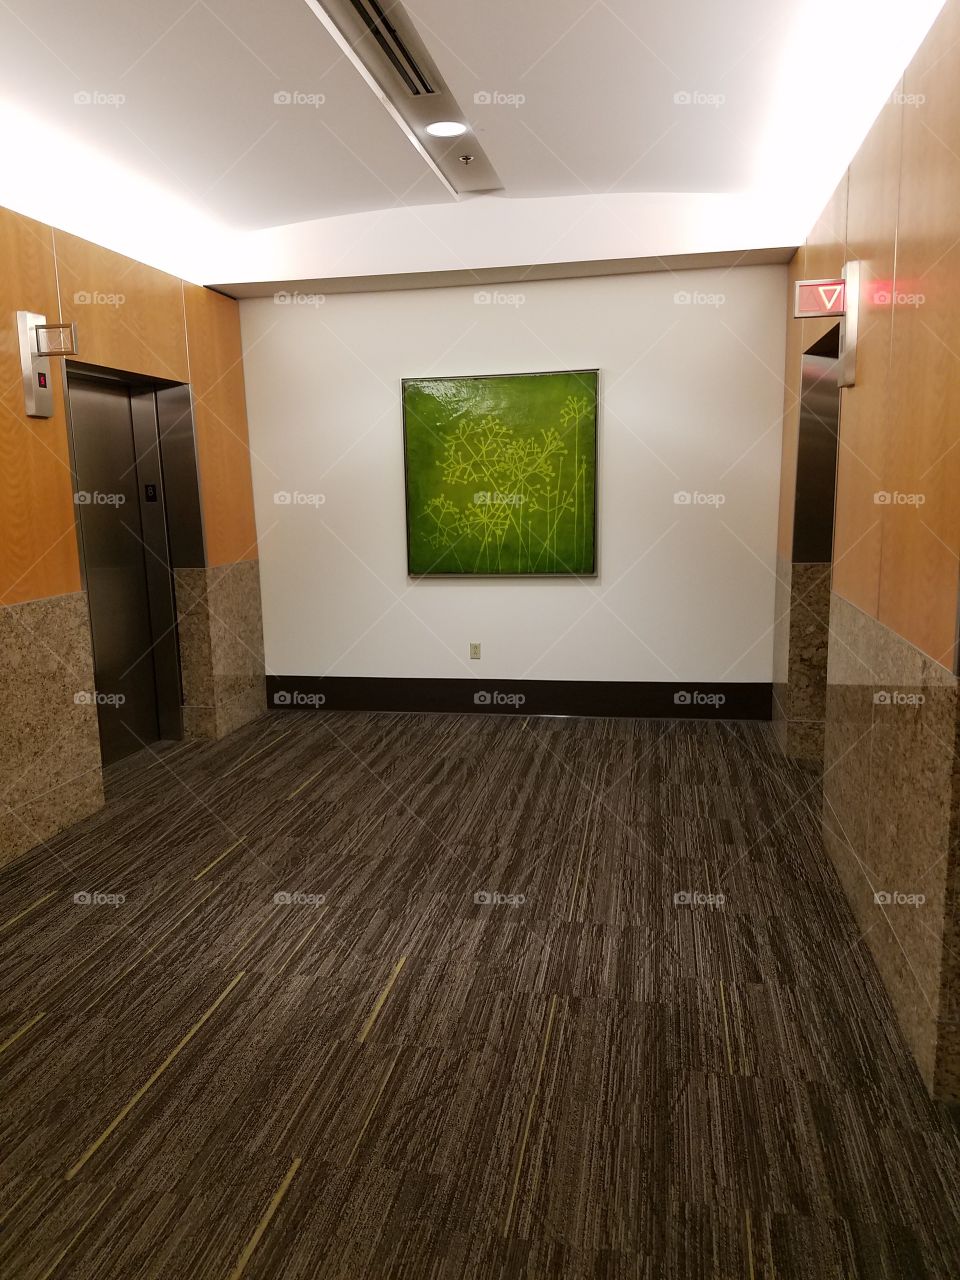 elevators Building interior